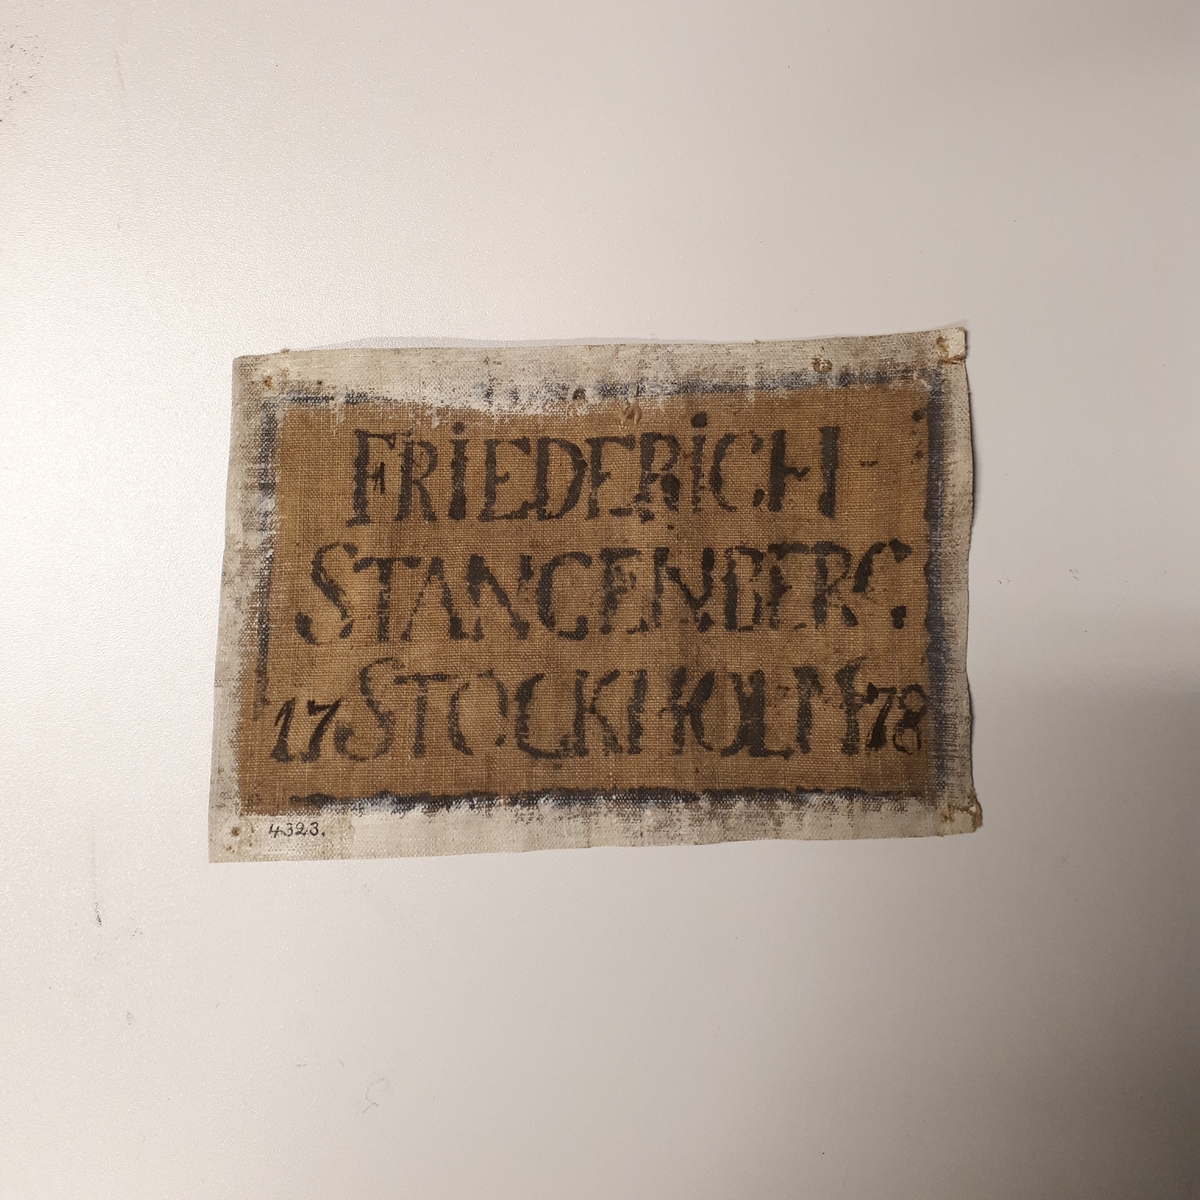 Rektangulär bit av en segelduk med tryckt text i svartblått: "Friedrich  Stangenberg 17 Stockholm 78”  inom fyrkant.